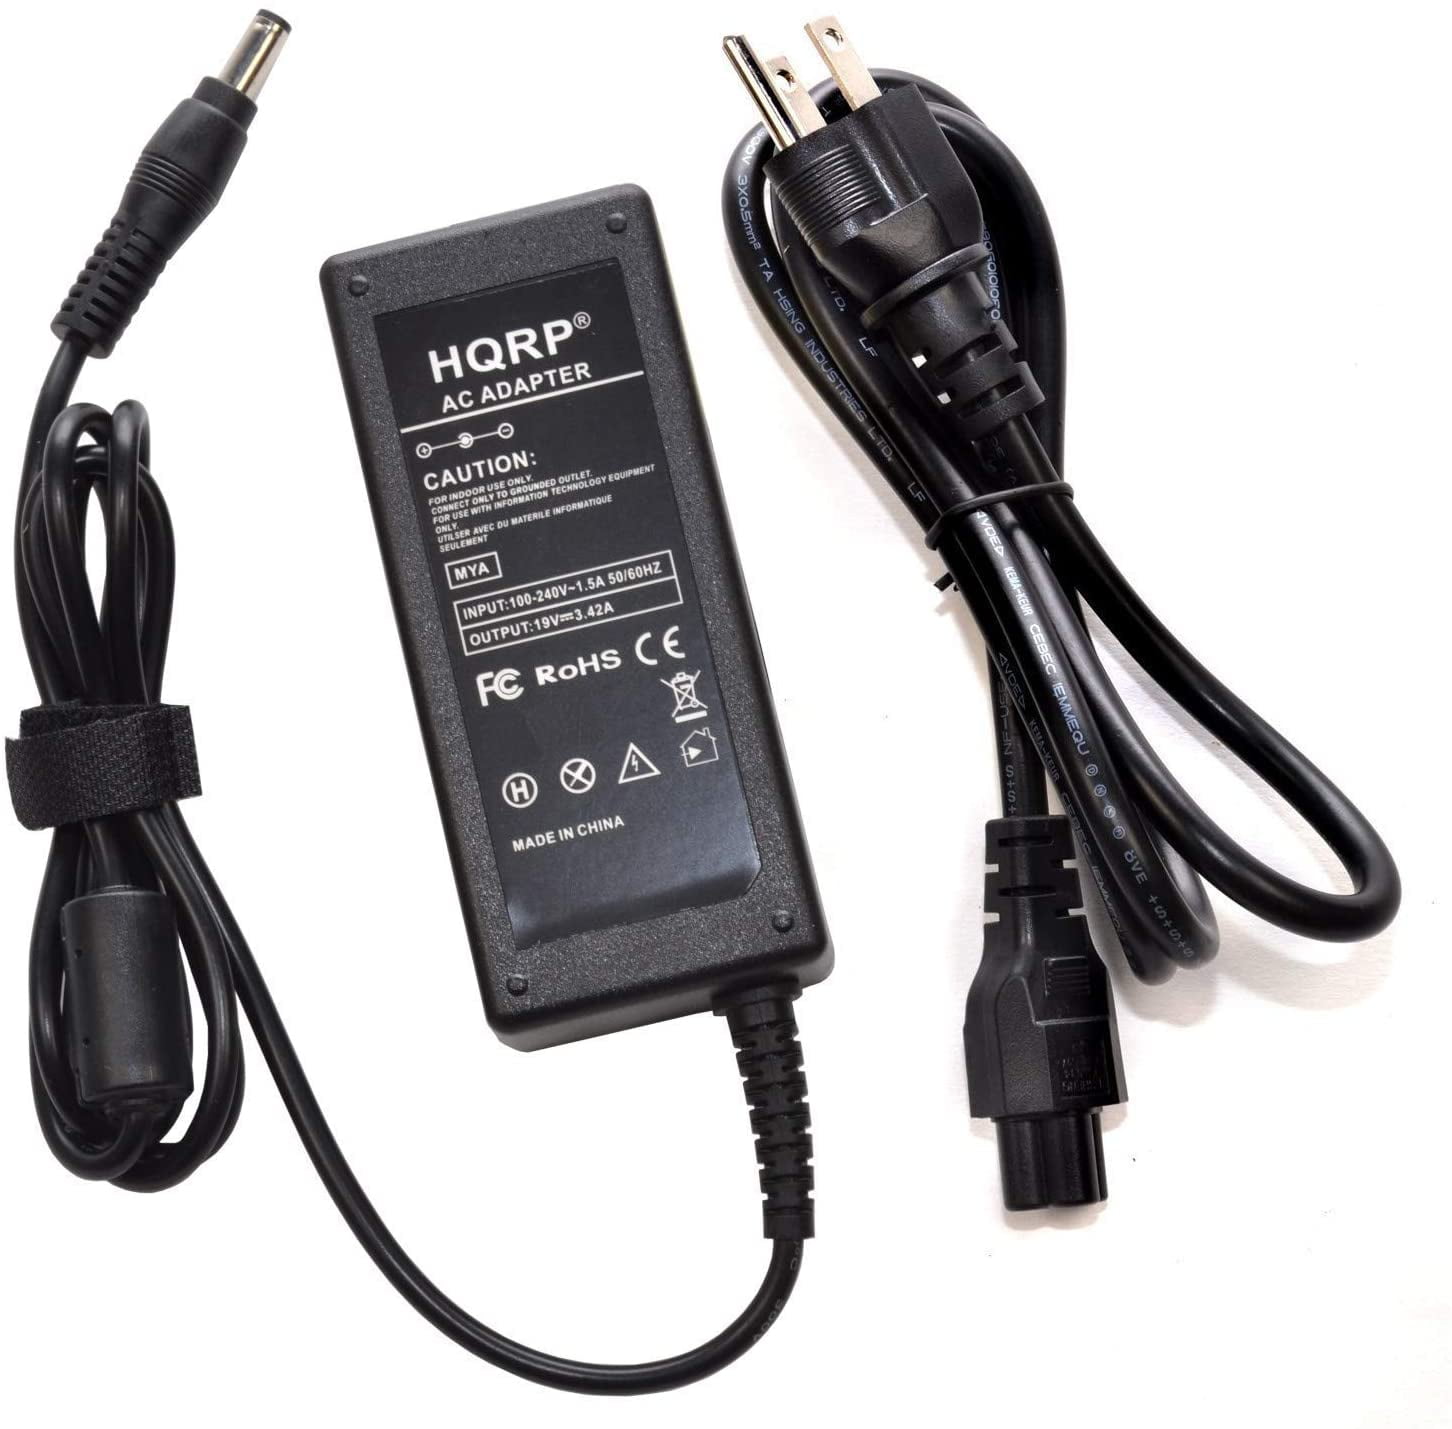 HQRP AC Adapter for Harman Kardon Onyx Wireless System Supply Cord Adaptor + Euro Plug Adapter -